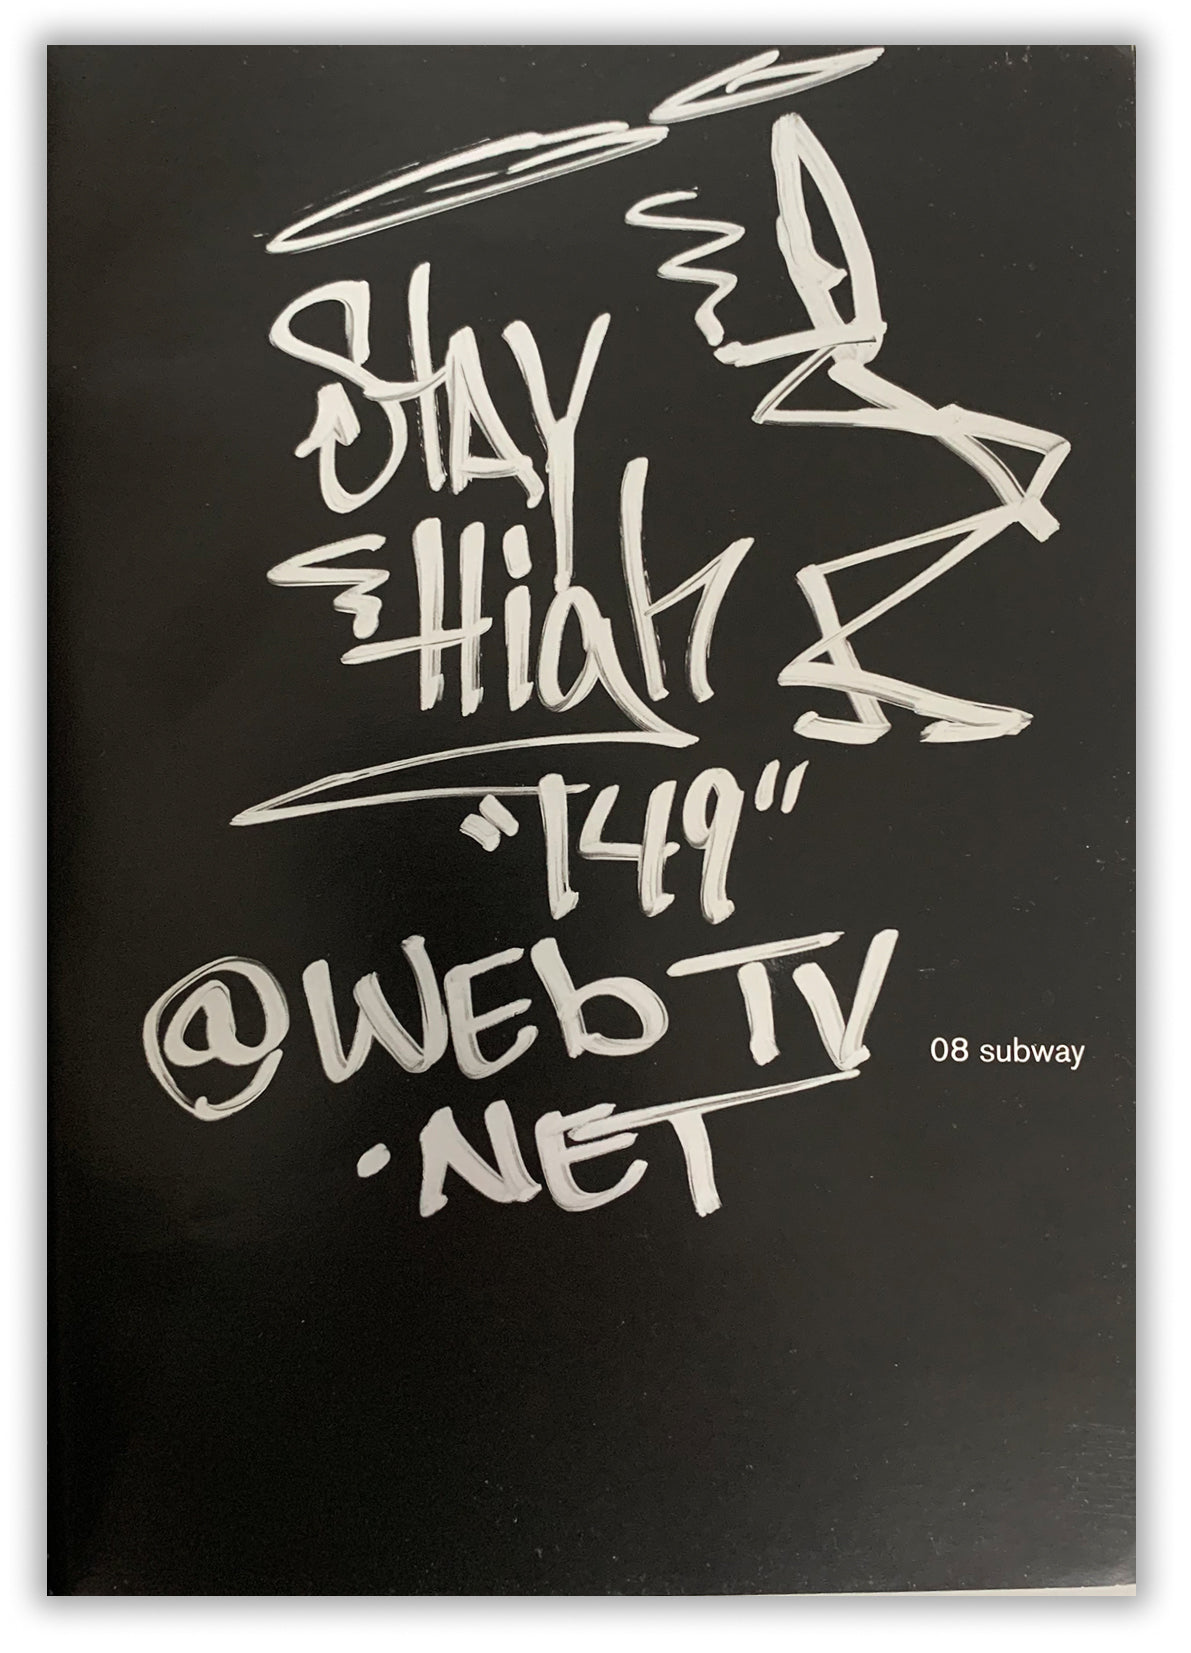 STAYHIGH 149 - "Web TV.Net" drawing